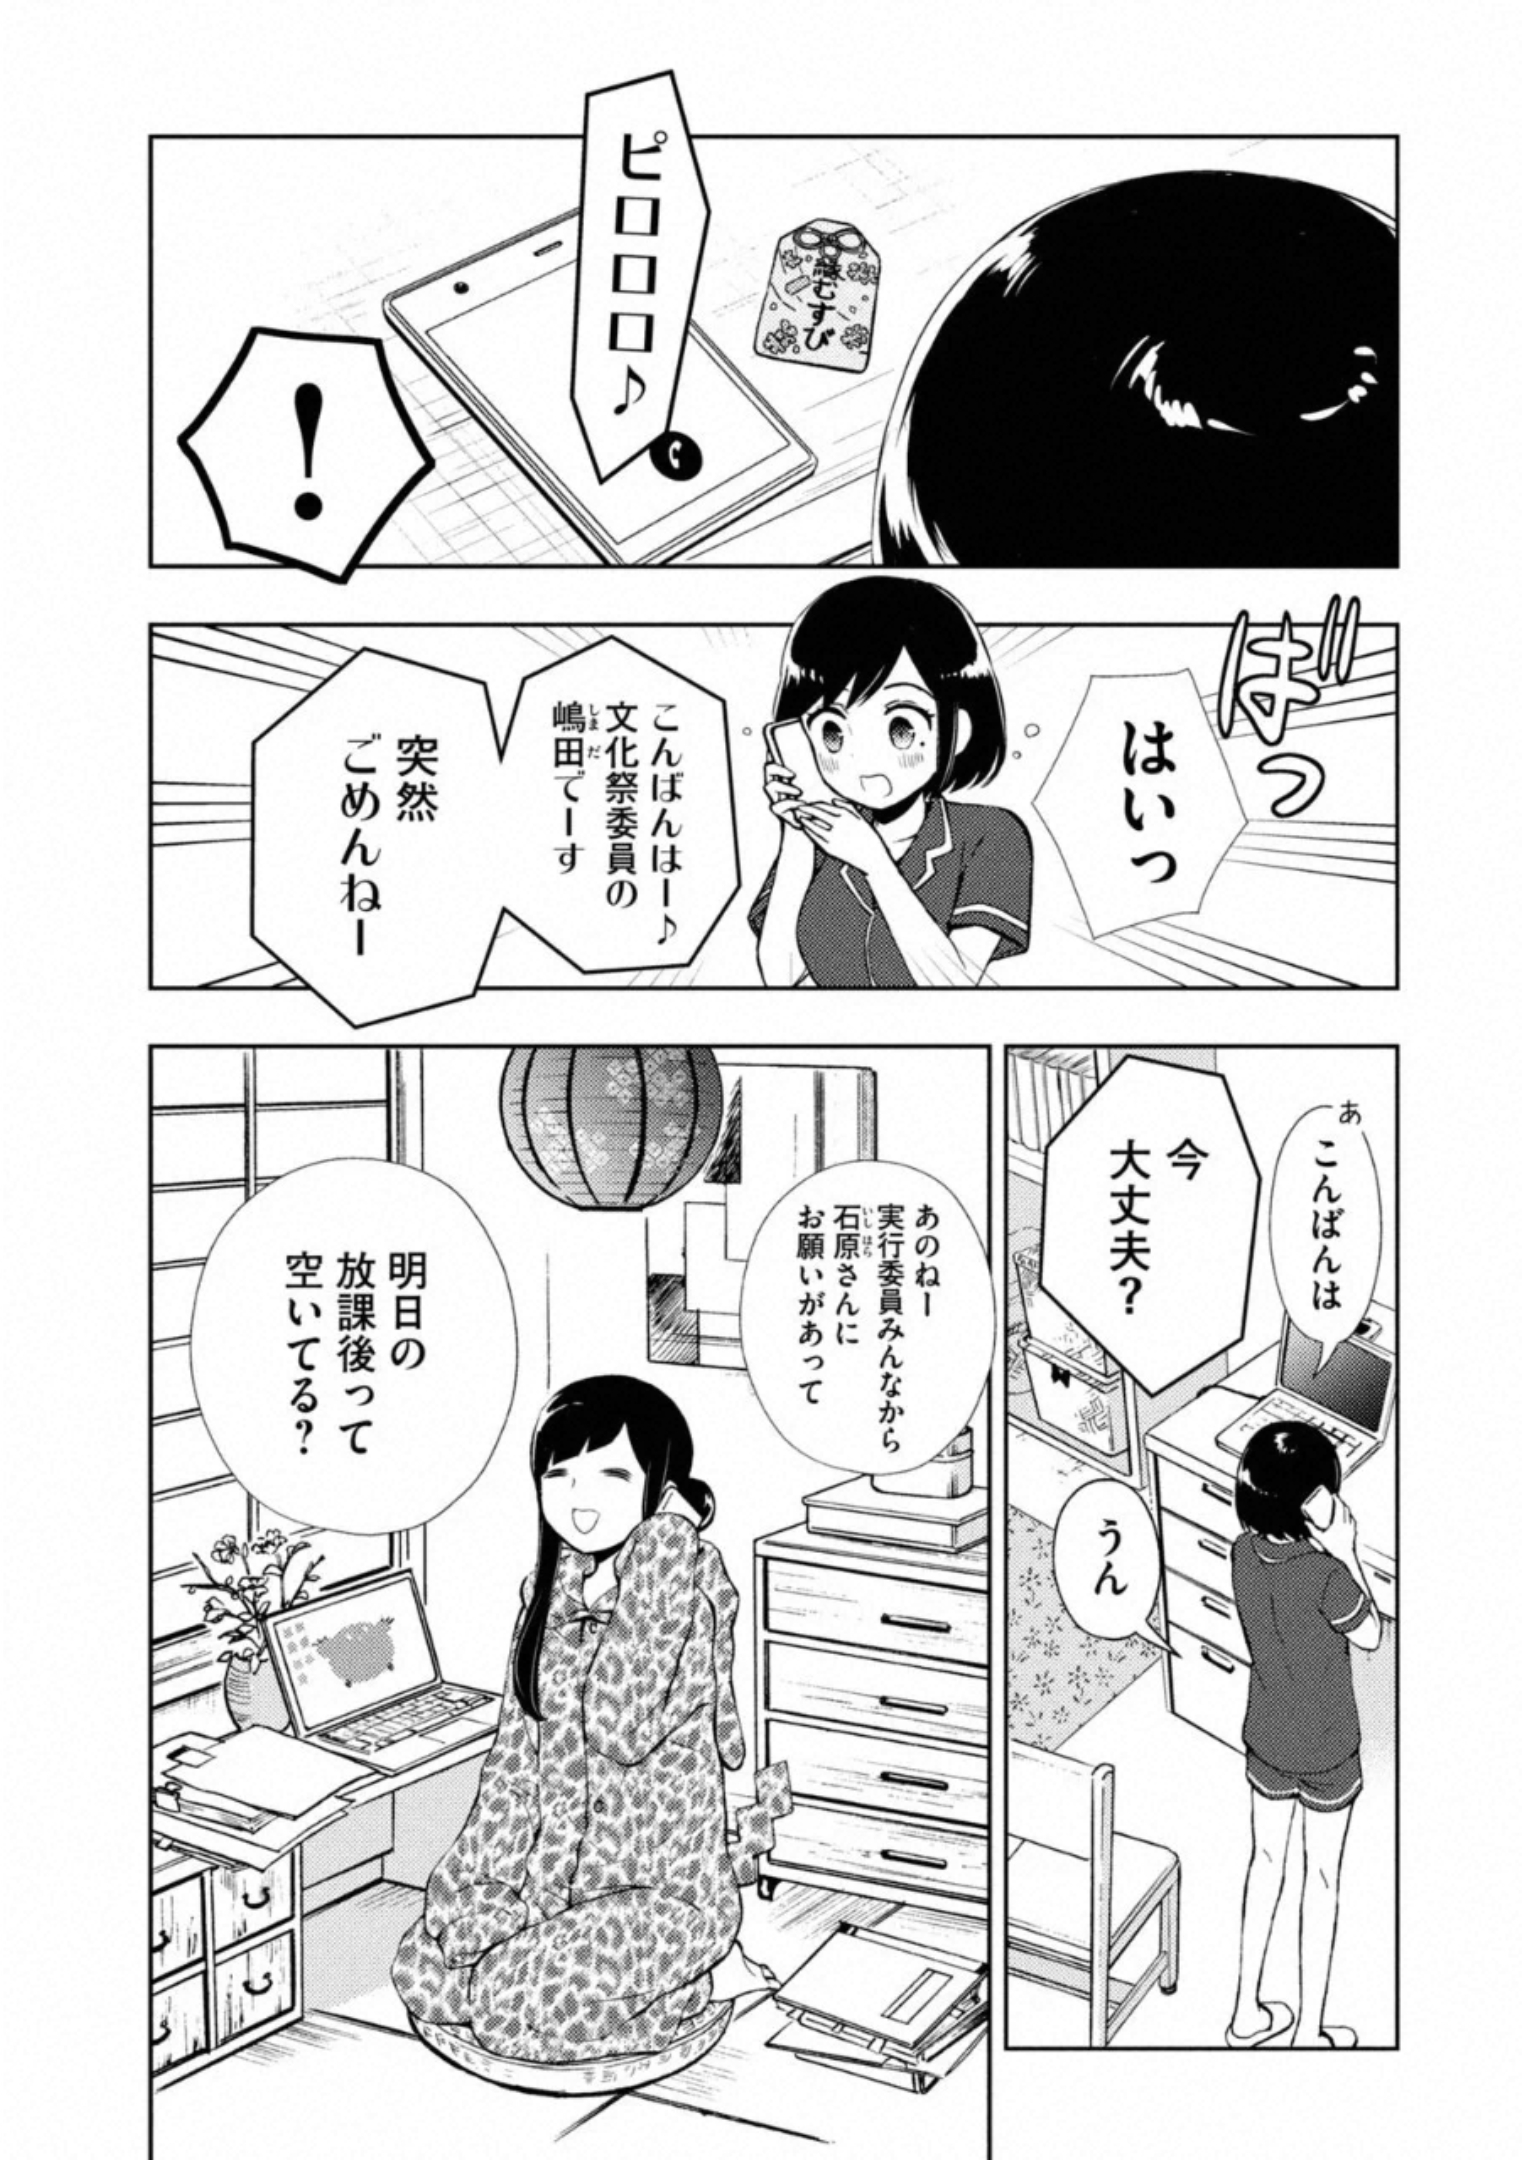 Watari-kun no xx ga Houkai Sunzen - Chapter 55 - Page 3